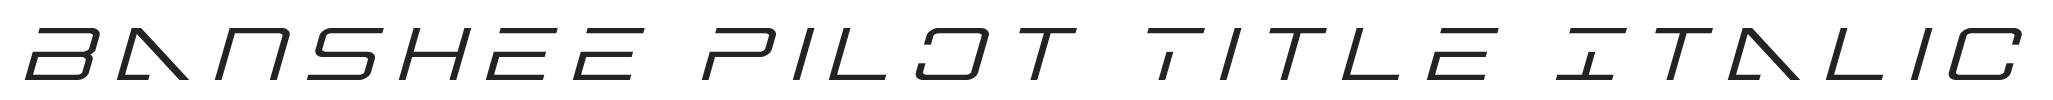 Banshee Pilot Title Italic.ttf图片展示